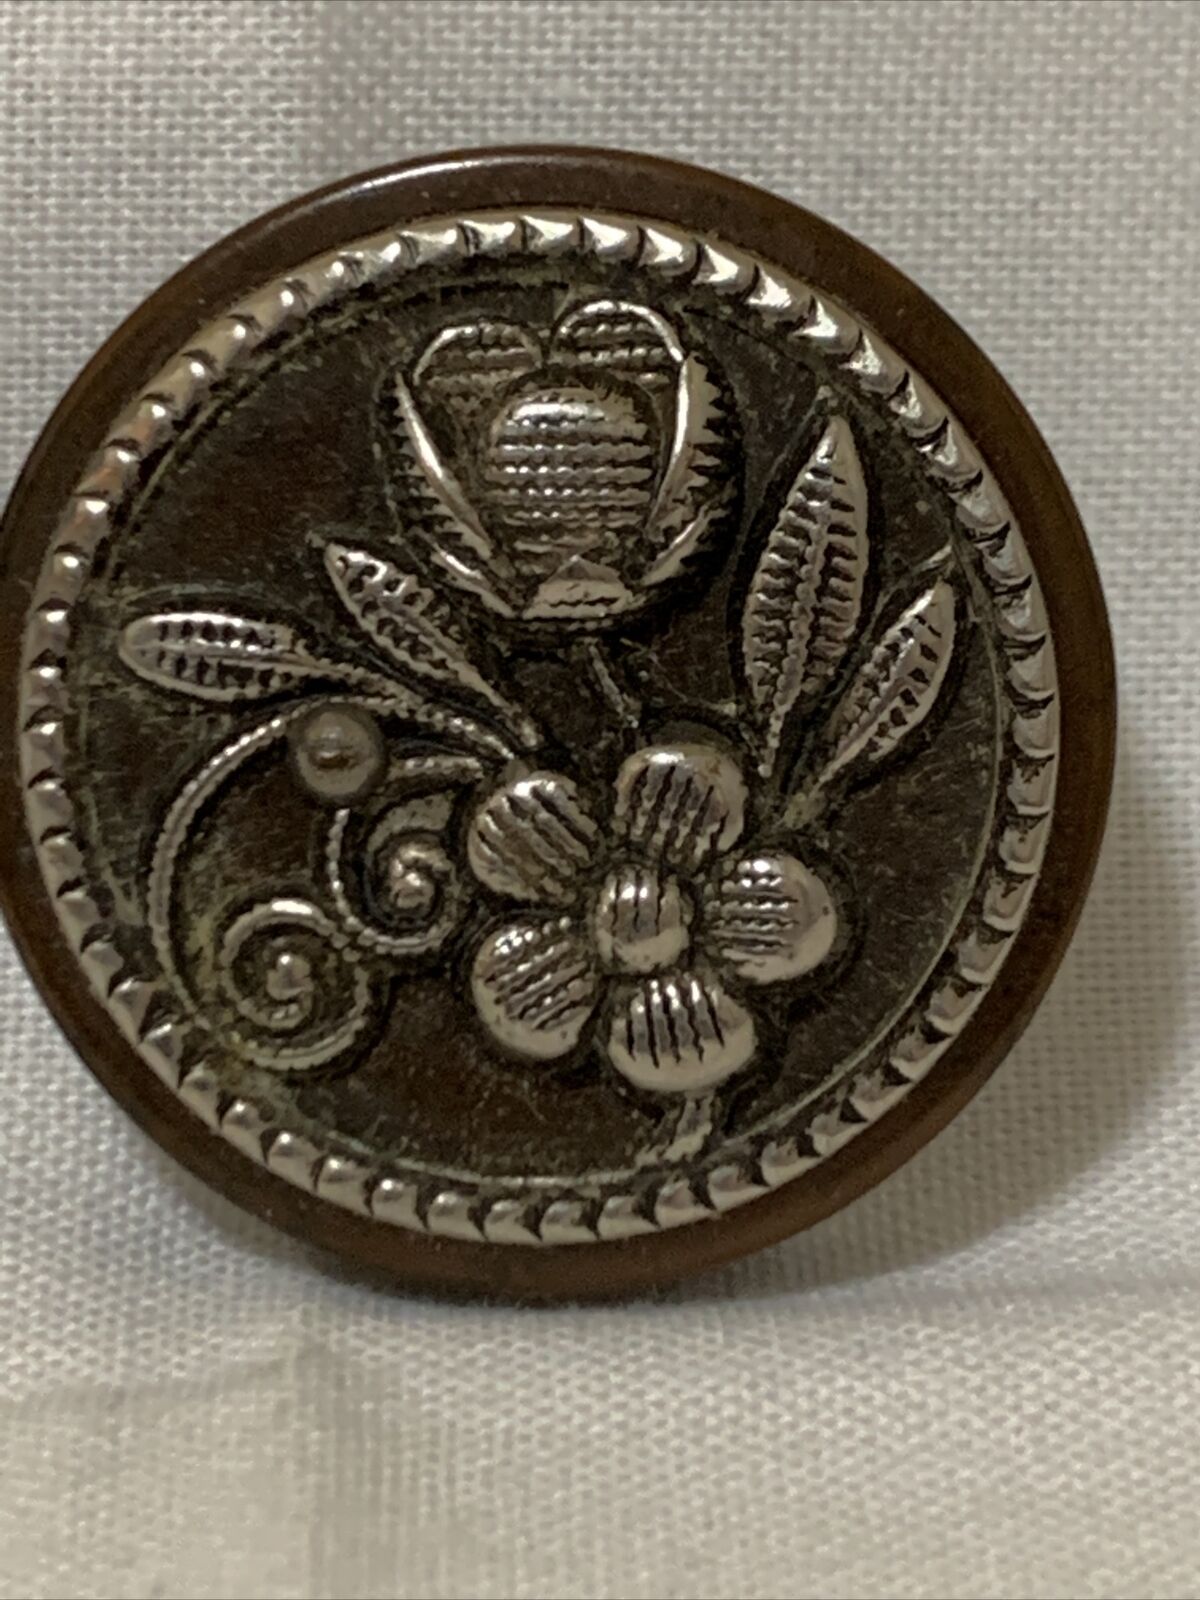 Antique Valuations: Antique￼ Bakelite Button Of Flowers